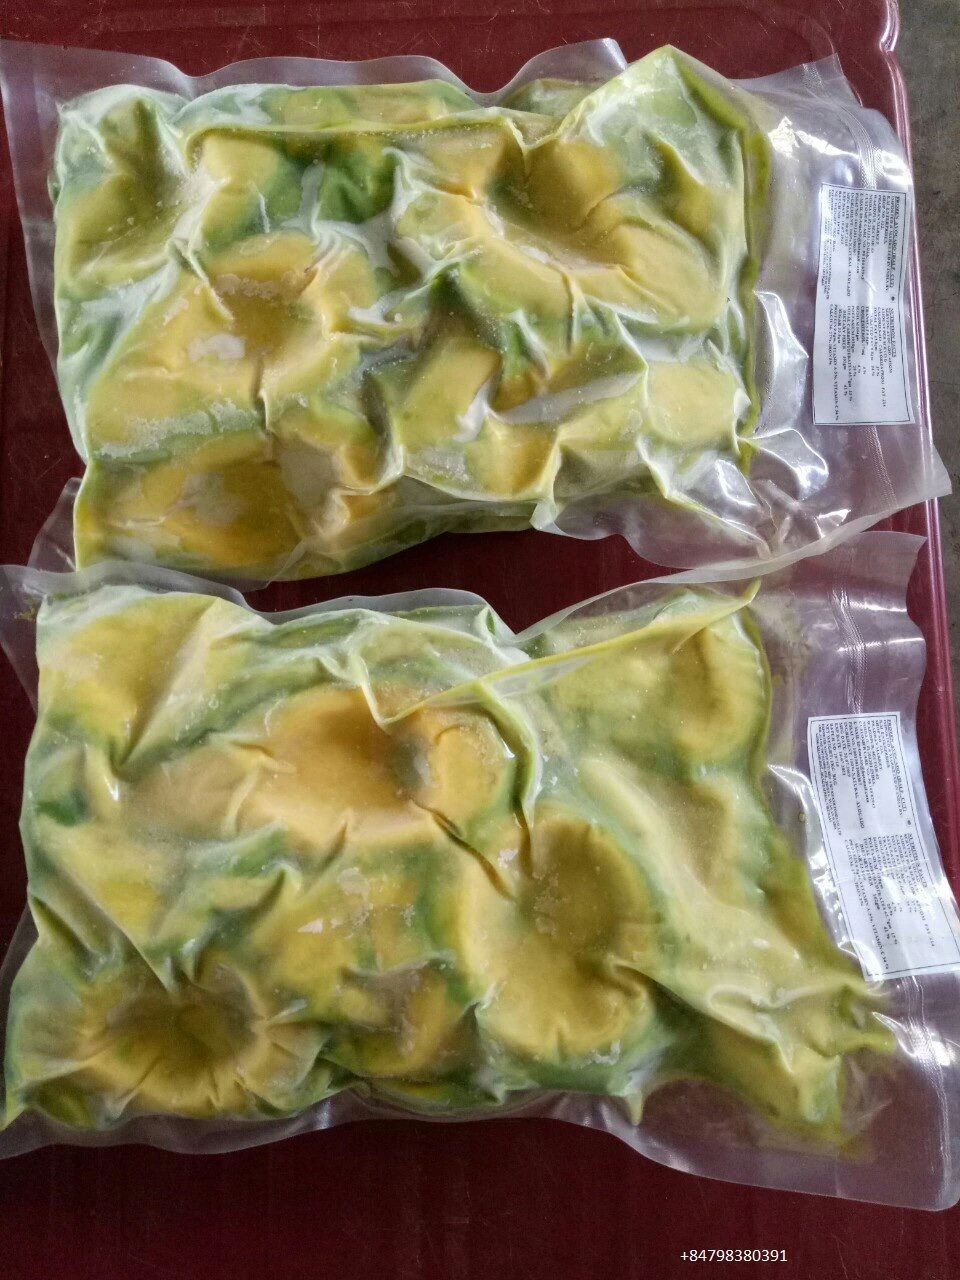 Frozen Avocado high quality best price from Vietnam